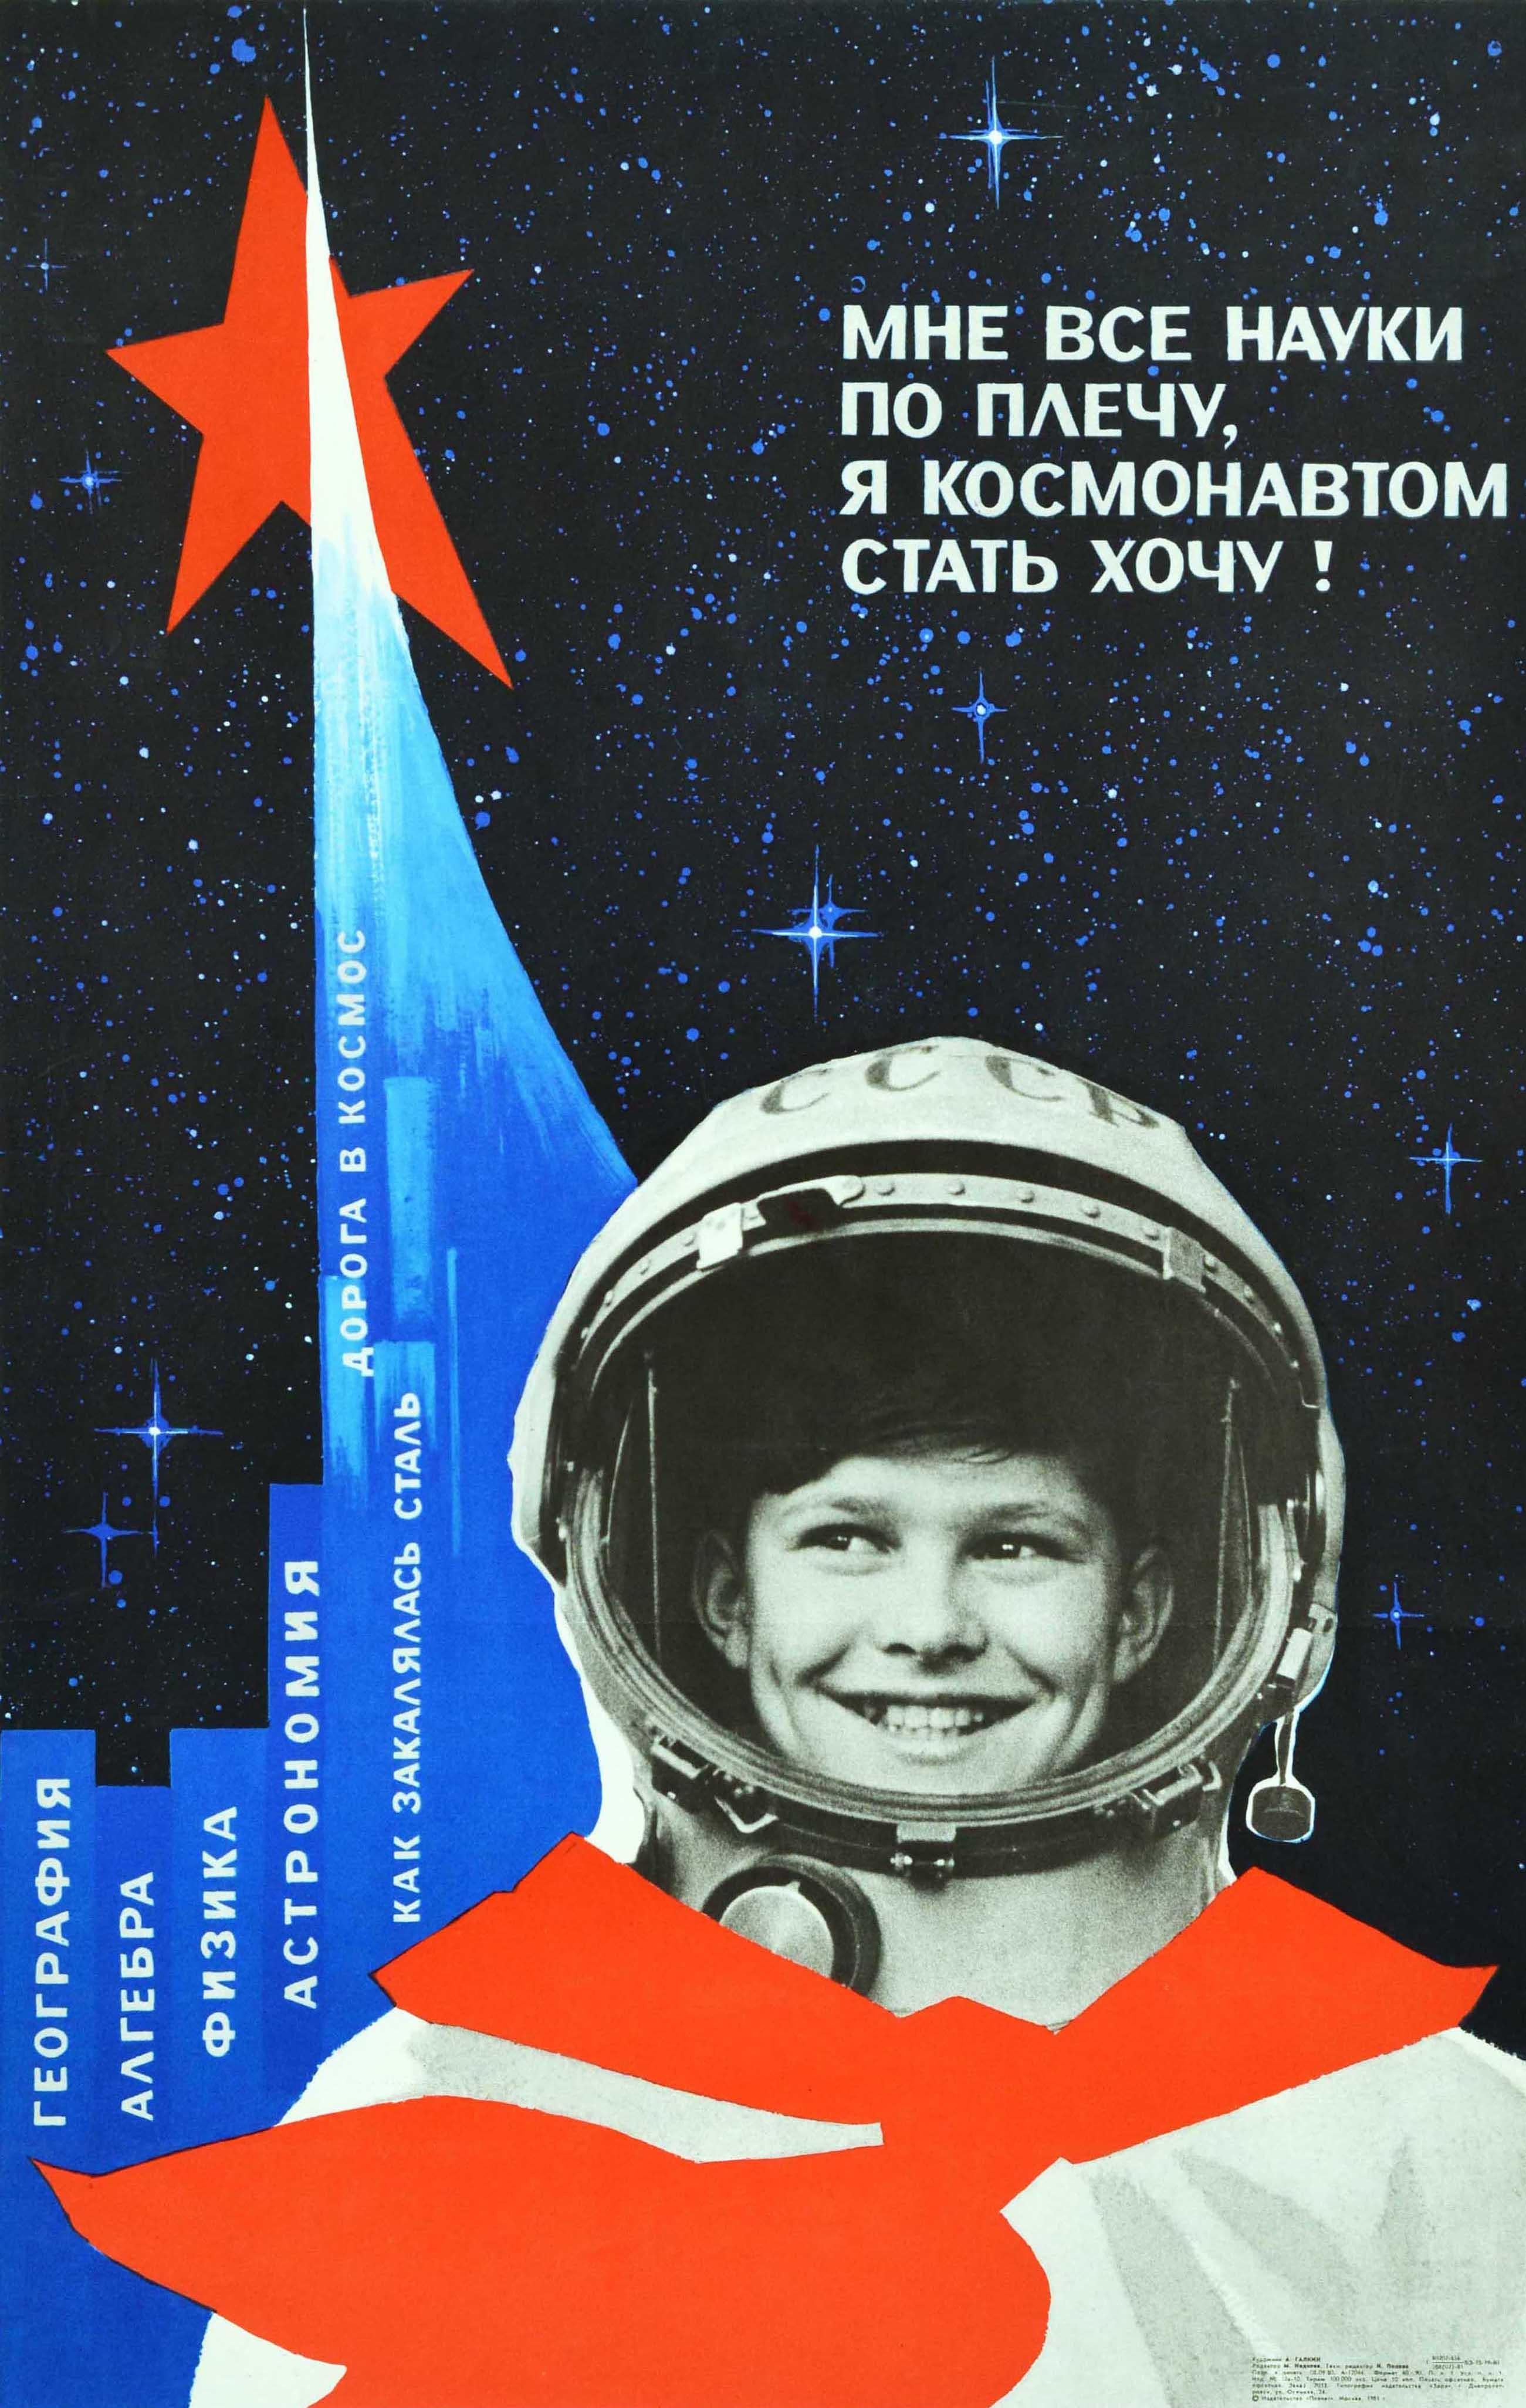 Galkin Print - Original Vintage Space Poster Soviet School Boy Cosmonaut Science Education USSR